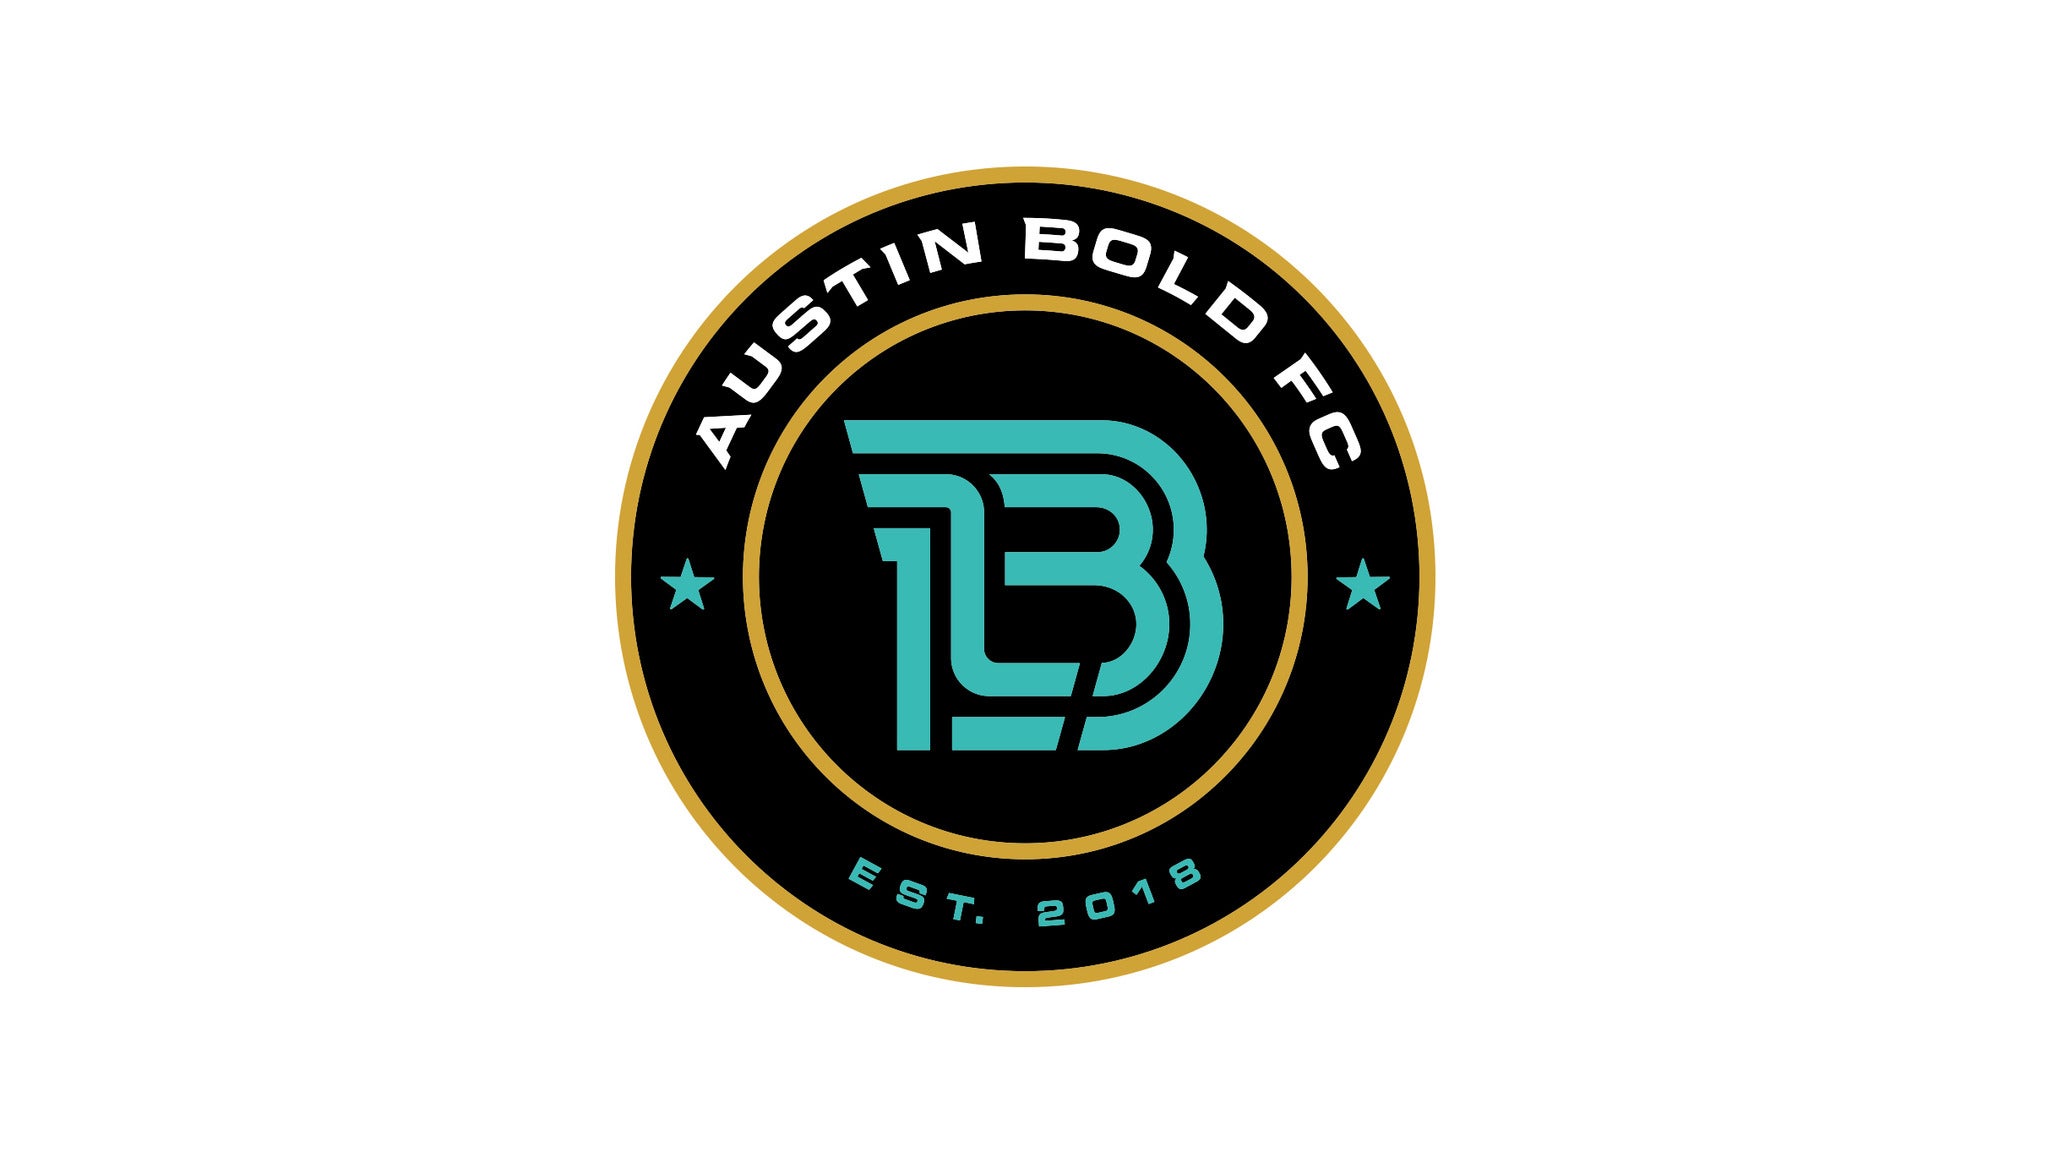 Austin Bold FC presale information on freepresalepasswords.com